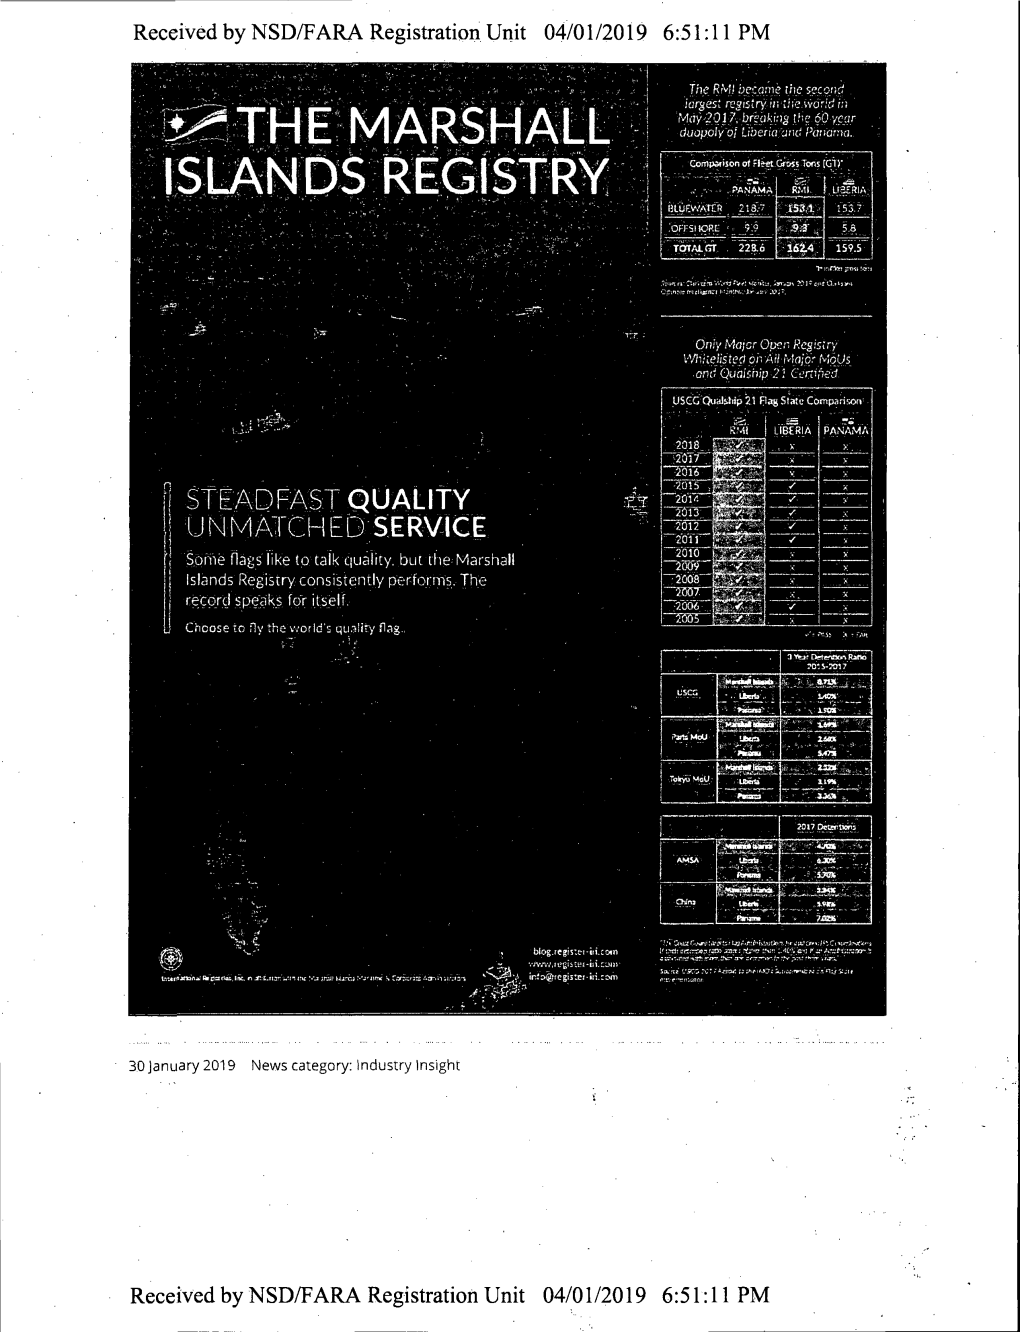 ^The Marshall Islands Registry